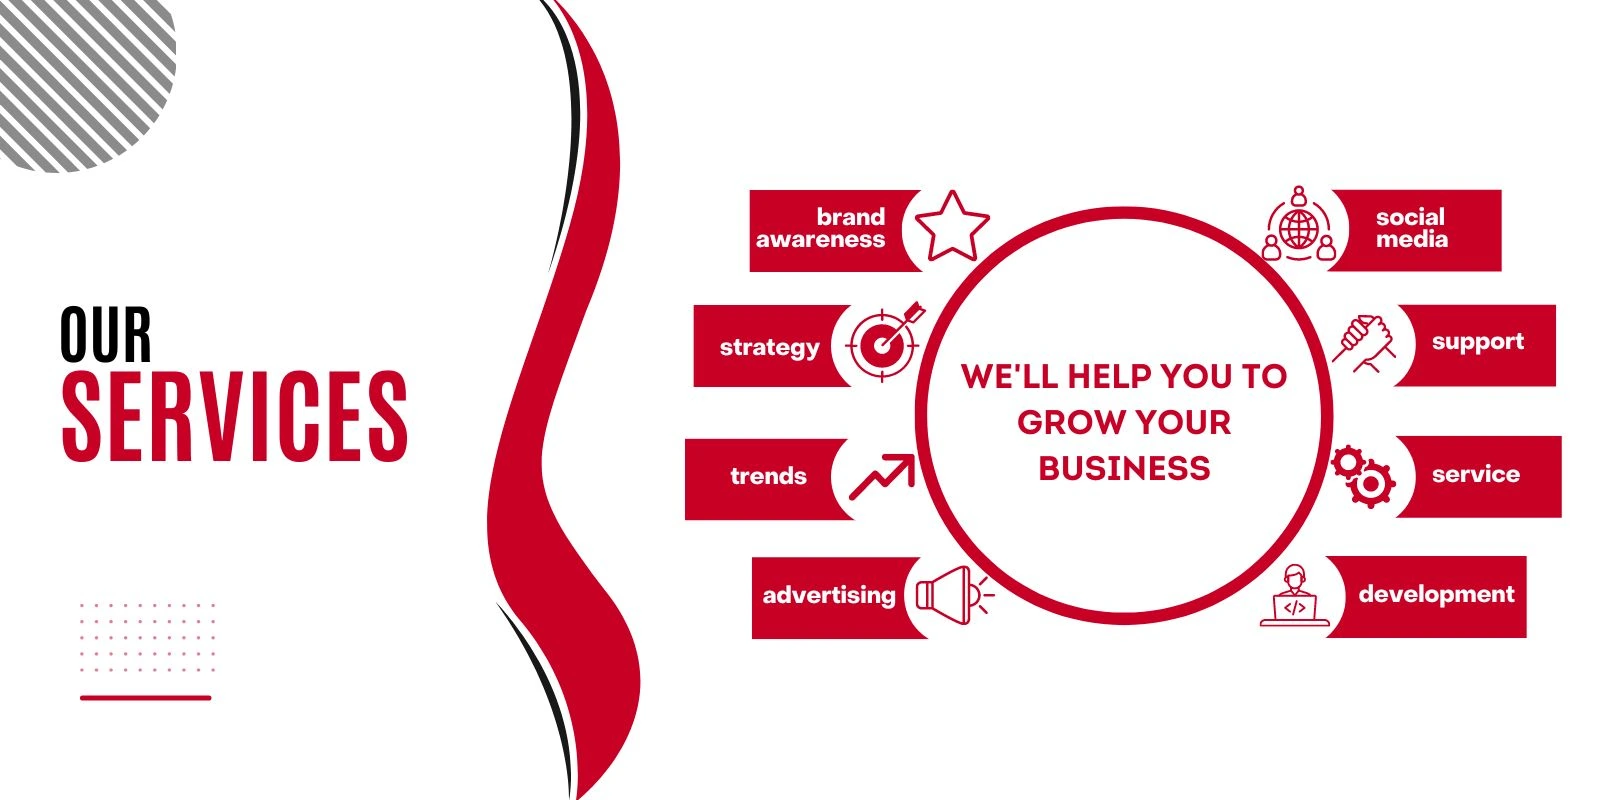 Digital Marketing Agency in UAE